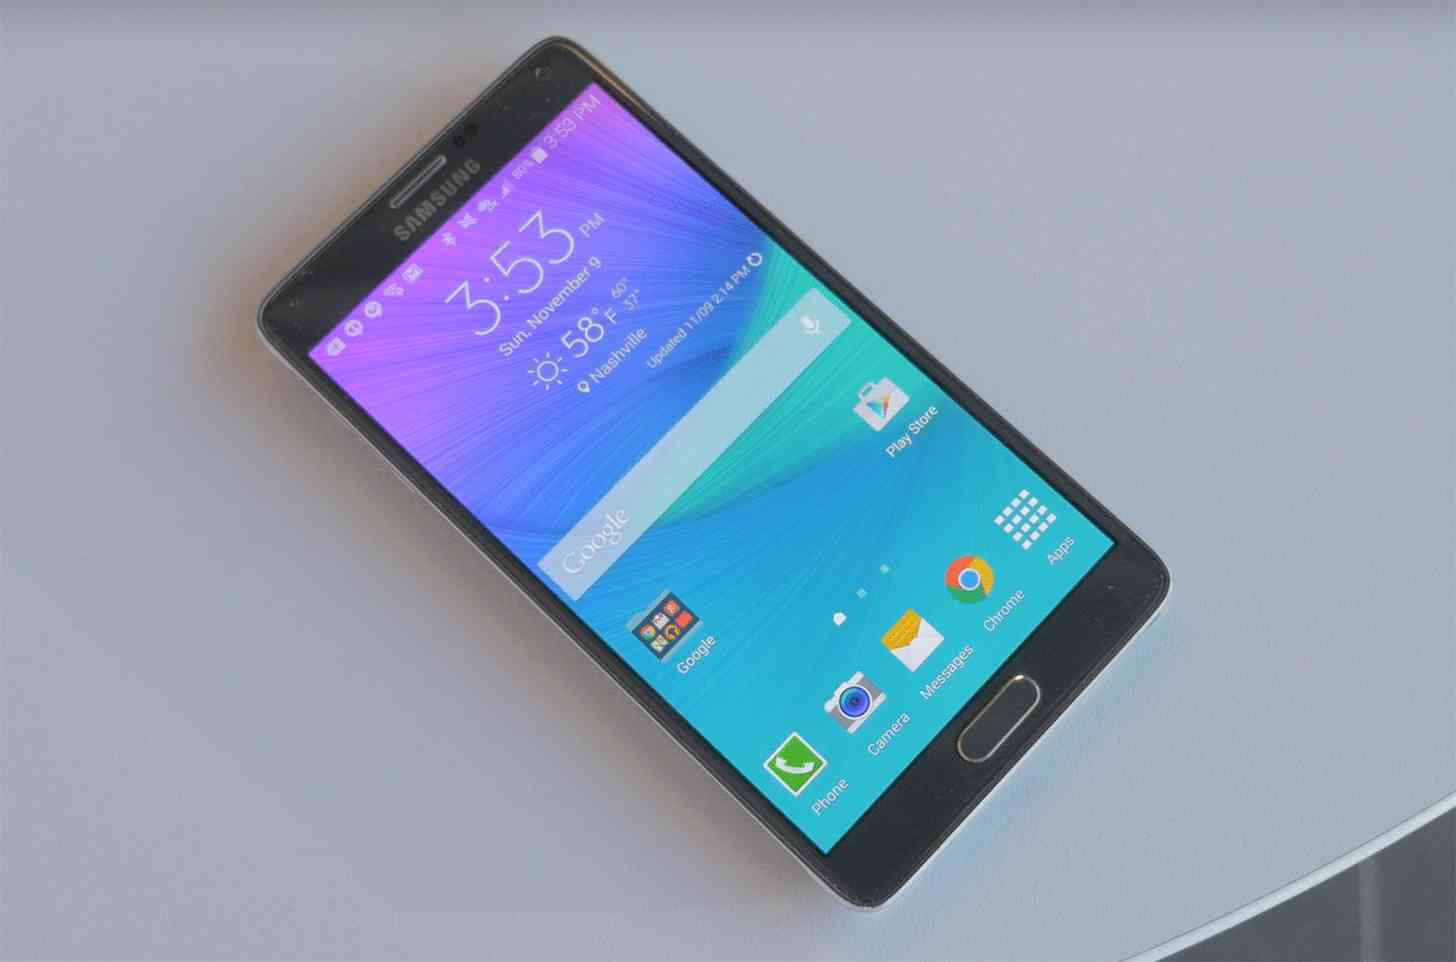 Samsung Galaxy Note 4 hands-on